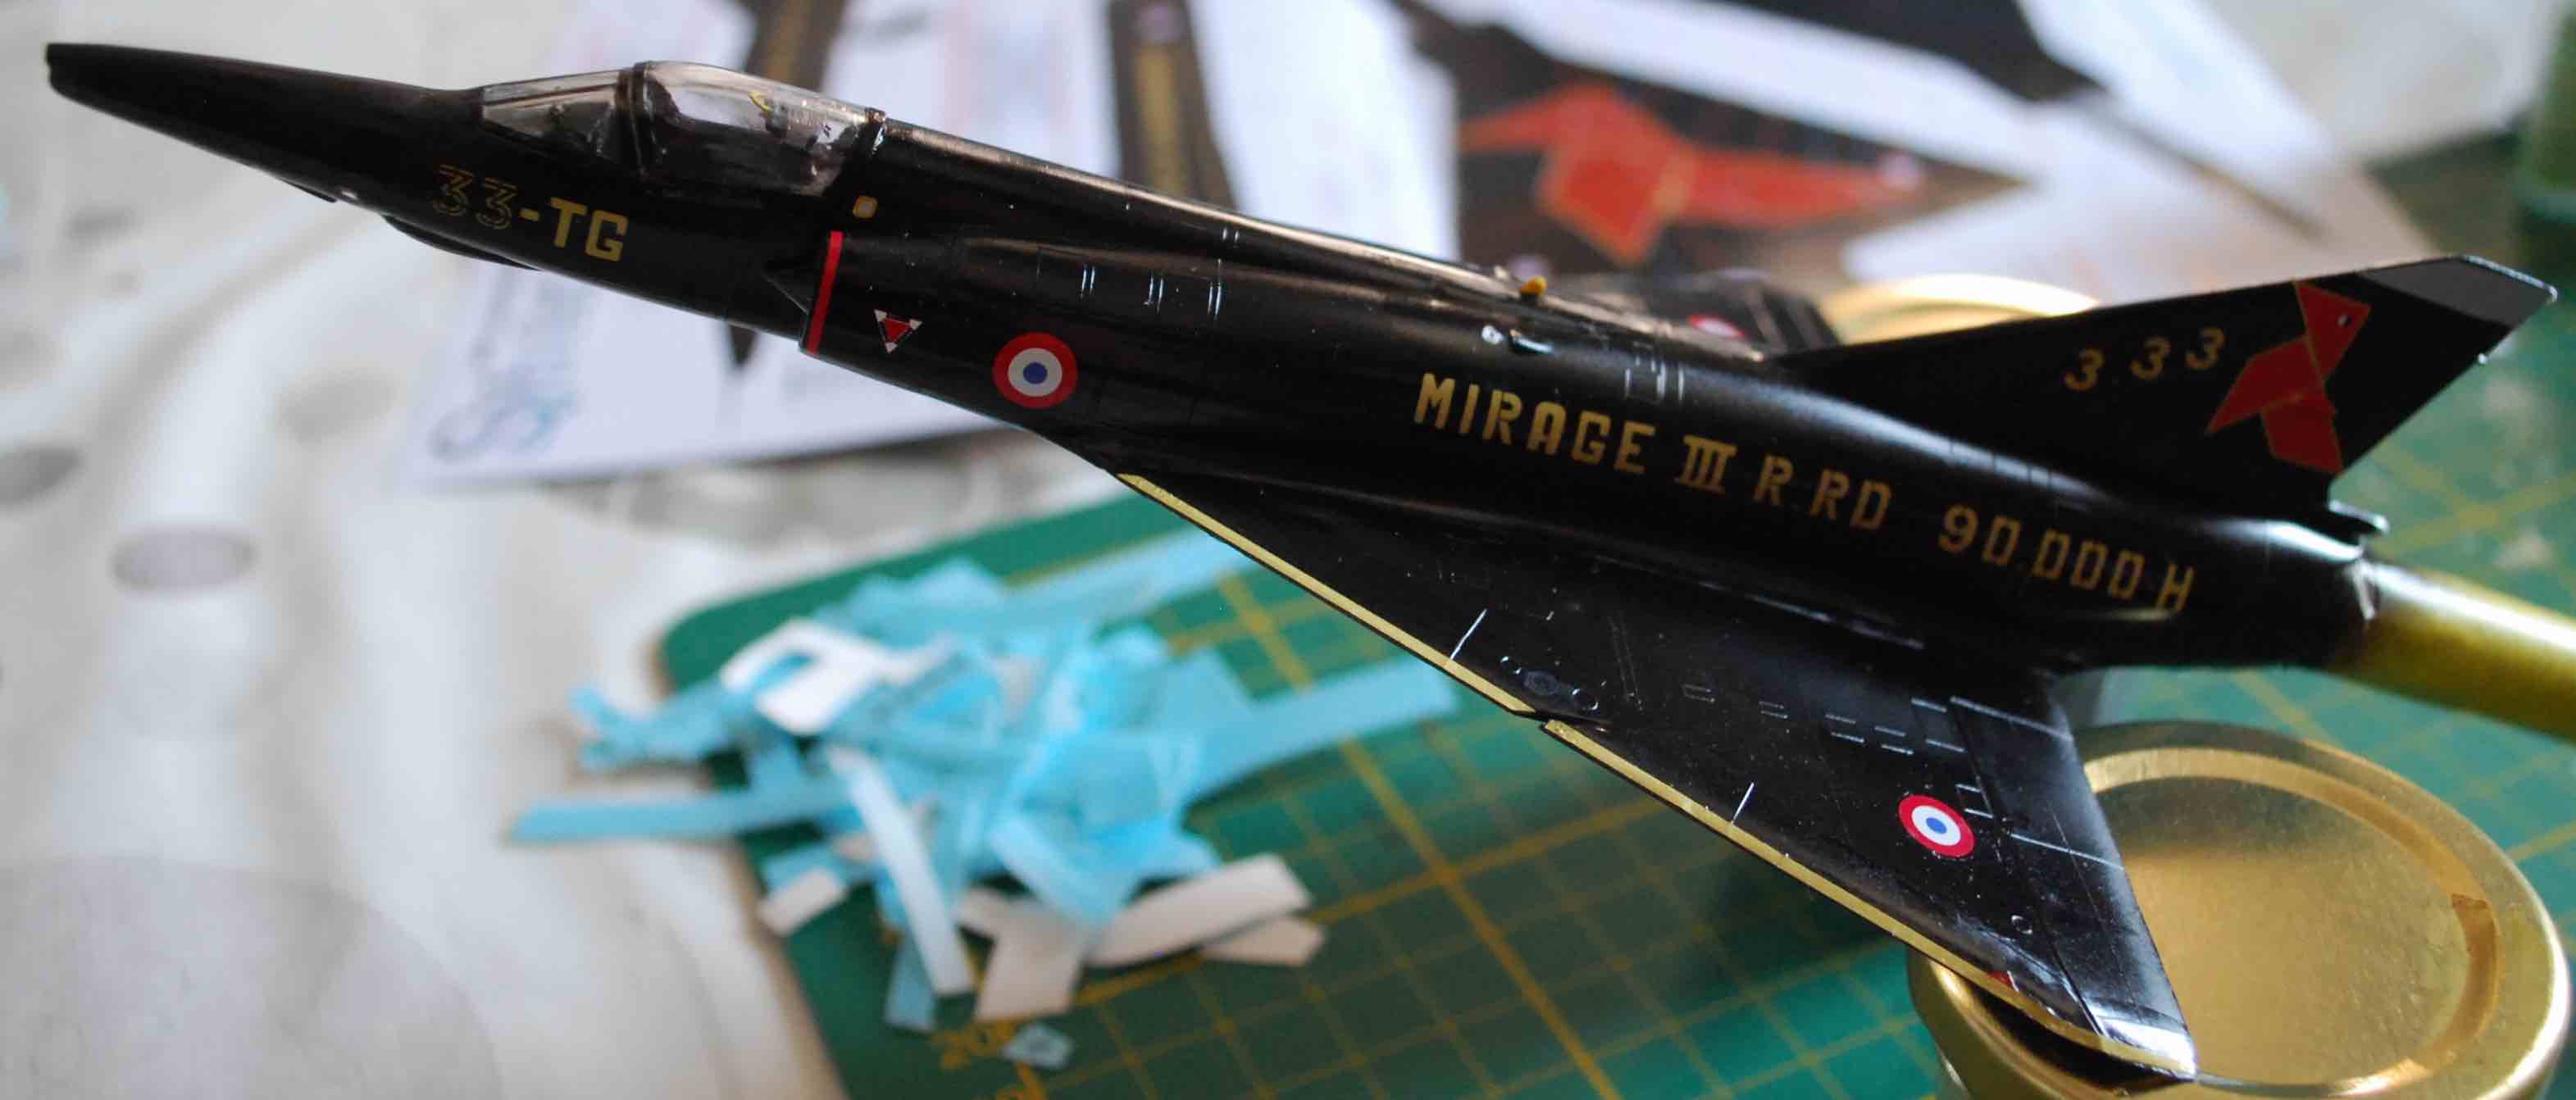 Mirage IIIRD 90000H 3.33 1/72 16060602573219947814286467